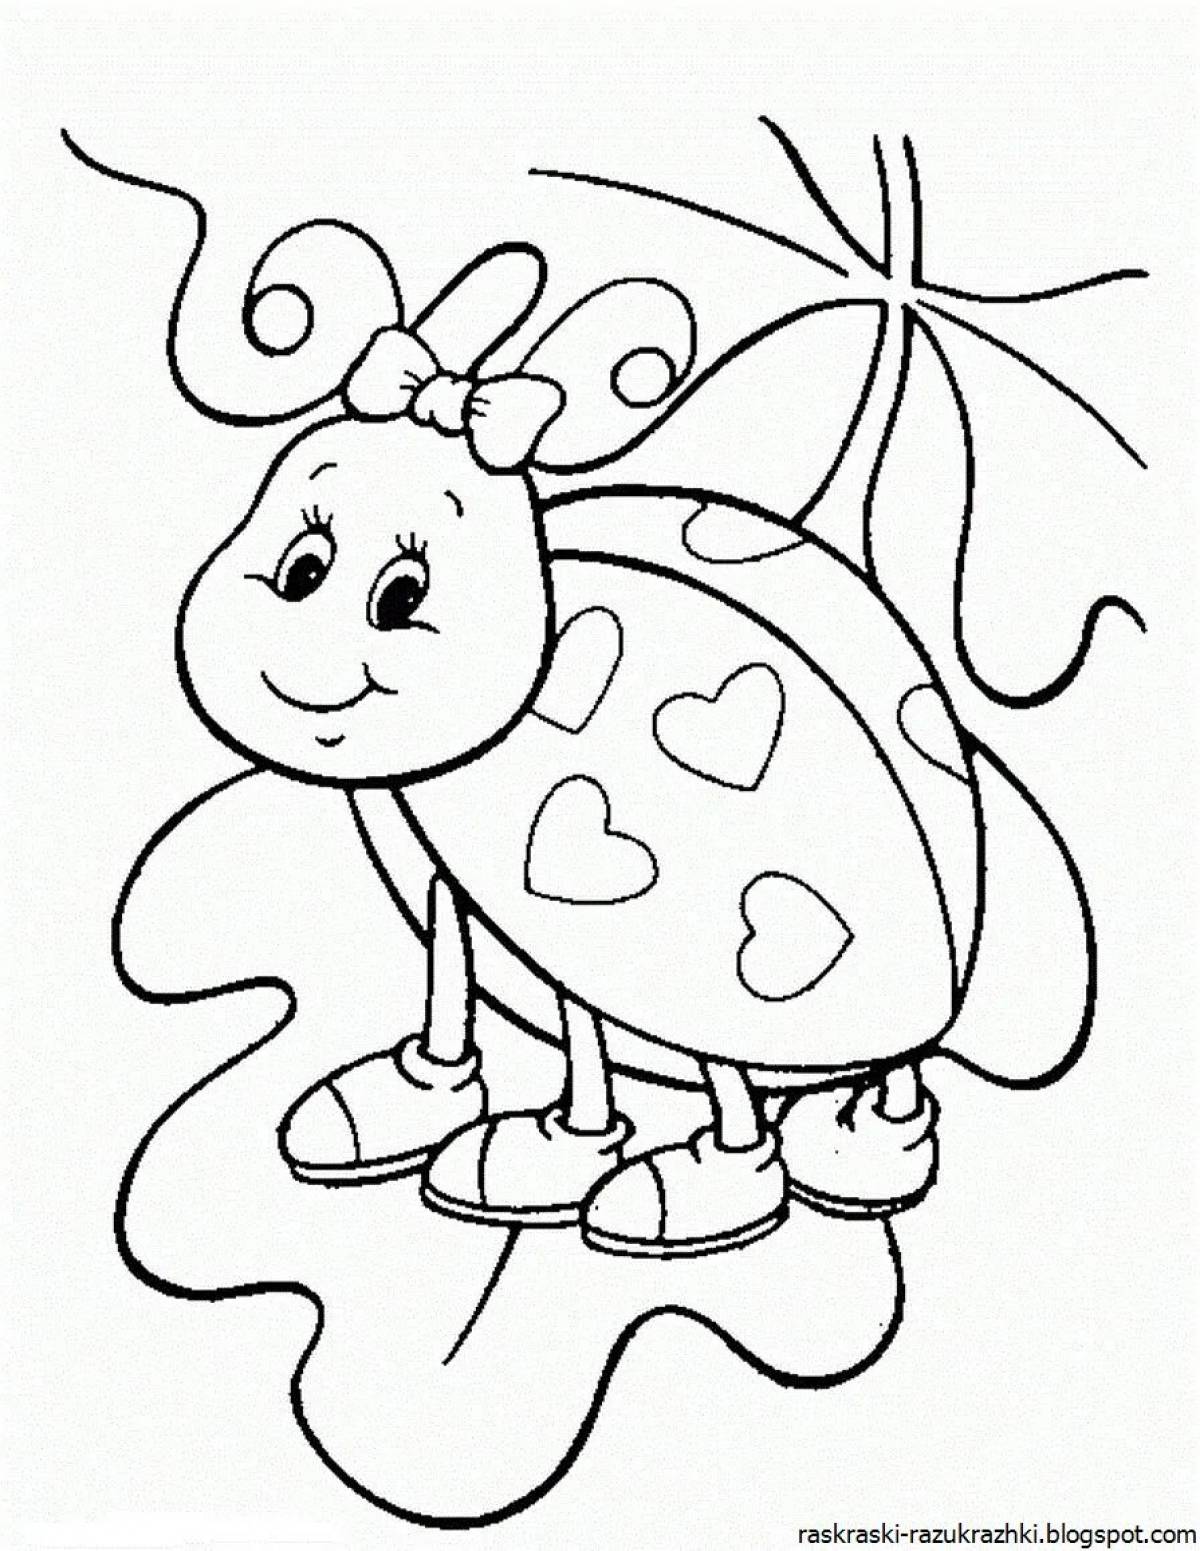 Crazy ladybug coloring book for kids